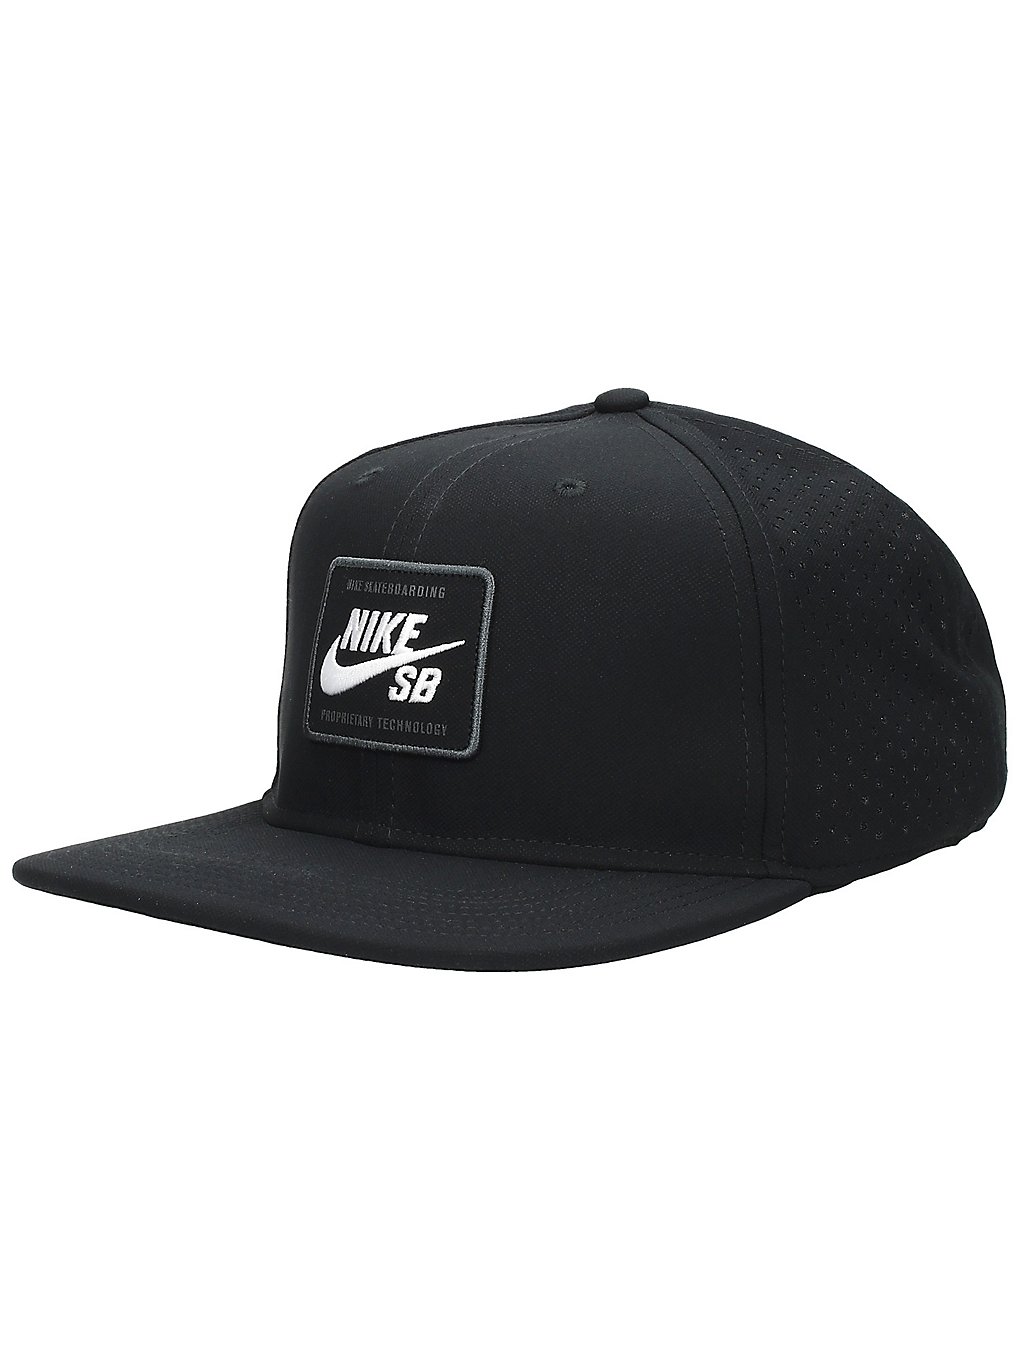 Nike arobill pro 2.0 trucker cap musta, nike